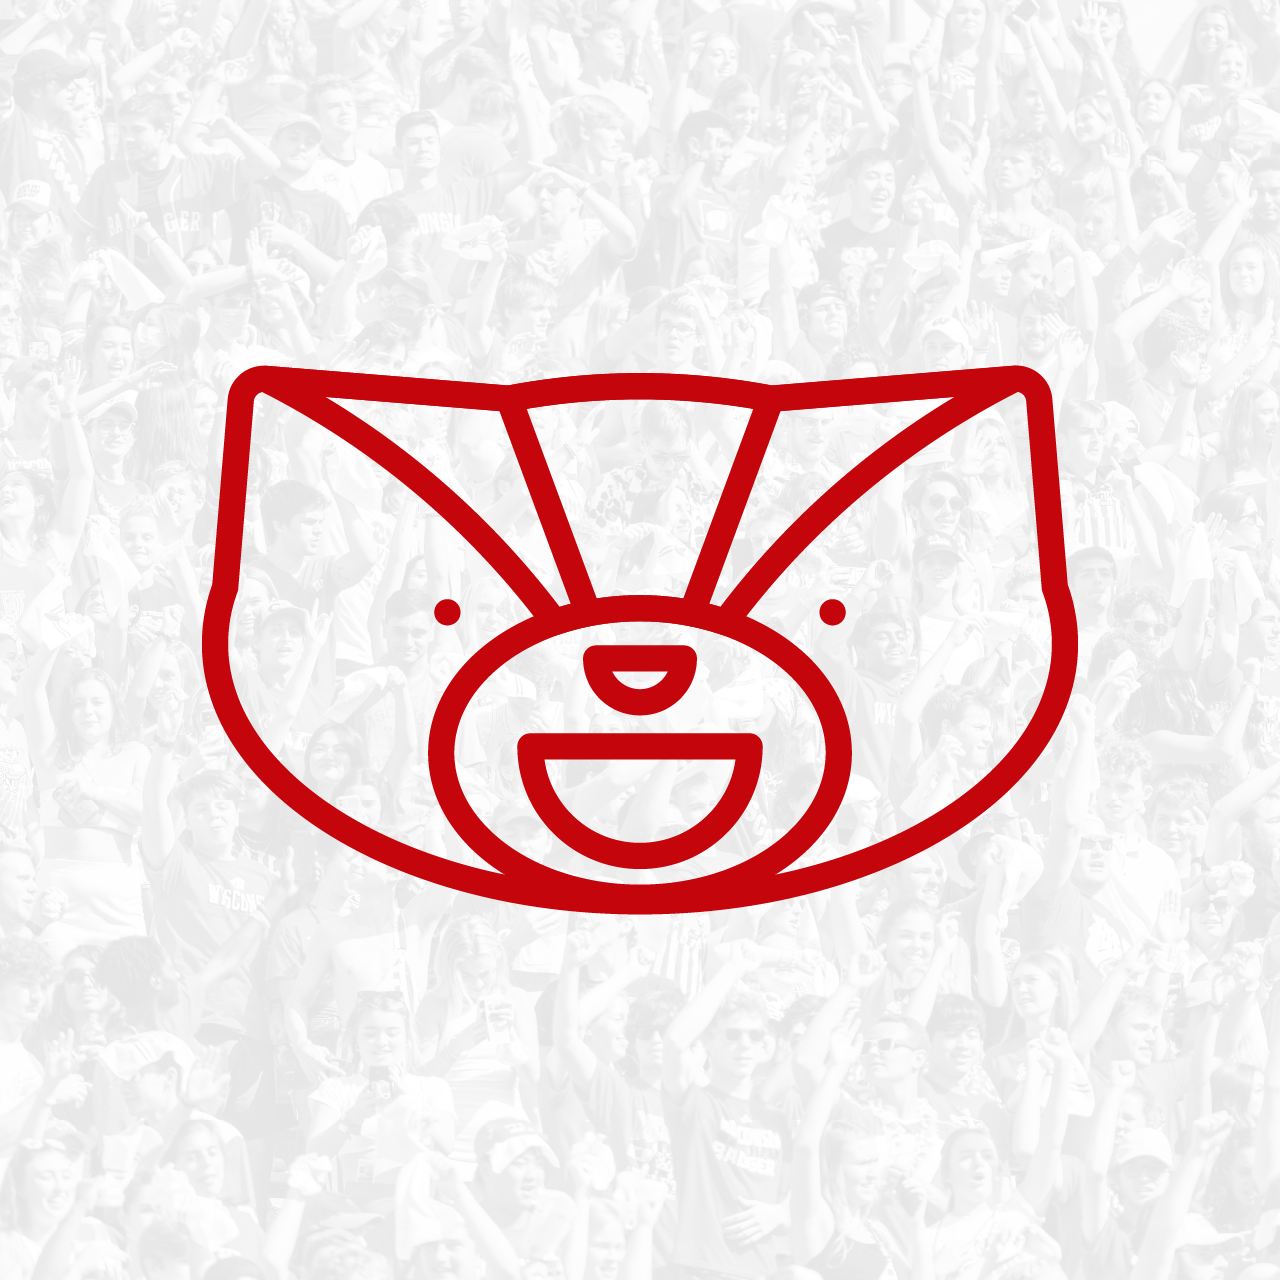 Icon of Bucky Badger the University of Wisconsin–Madison mascot